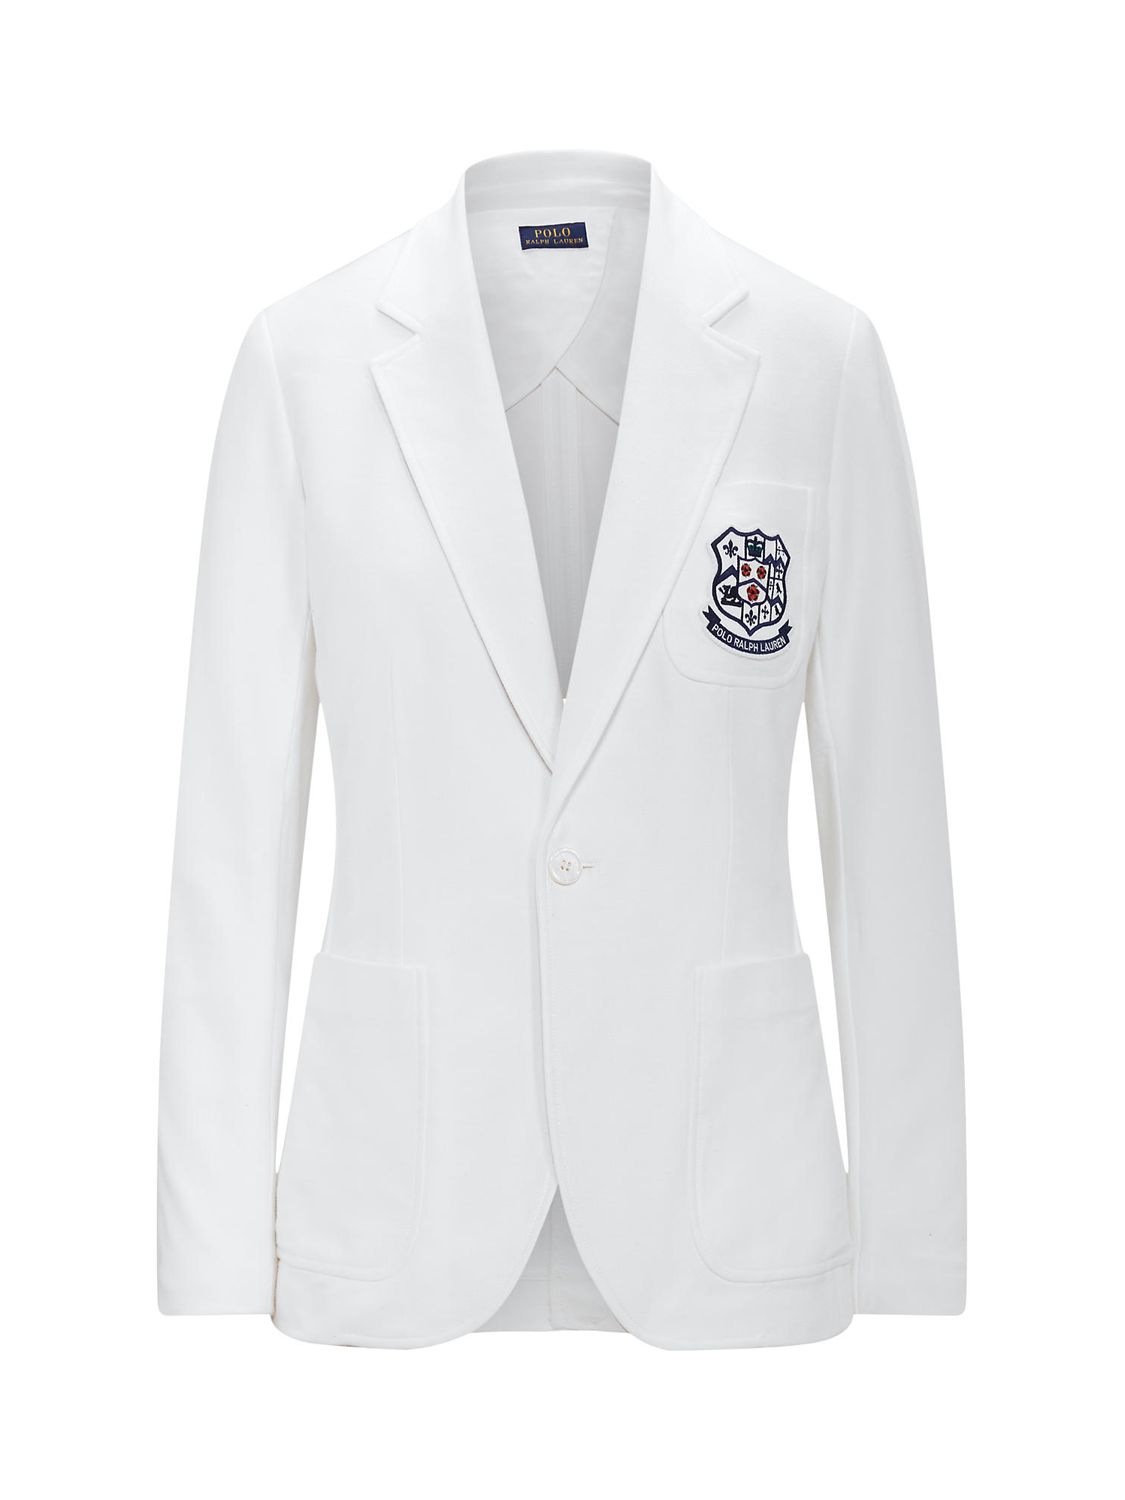 Polo Ralph Lauren Crest Patch Blazer, White at John Lewis & Partners